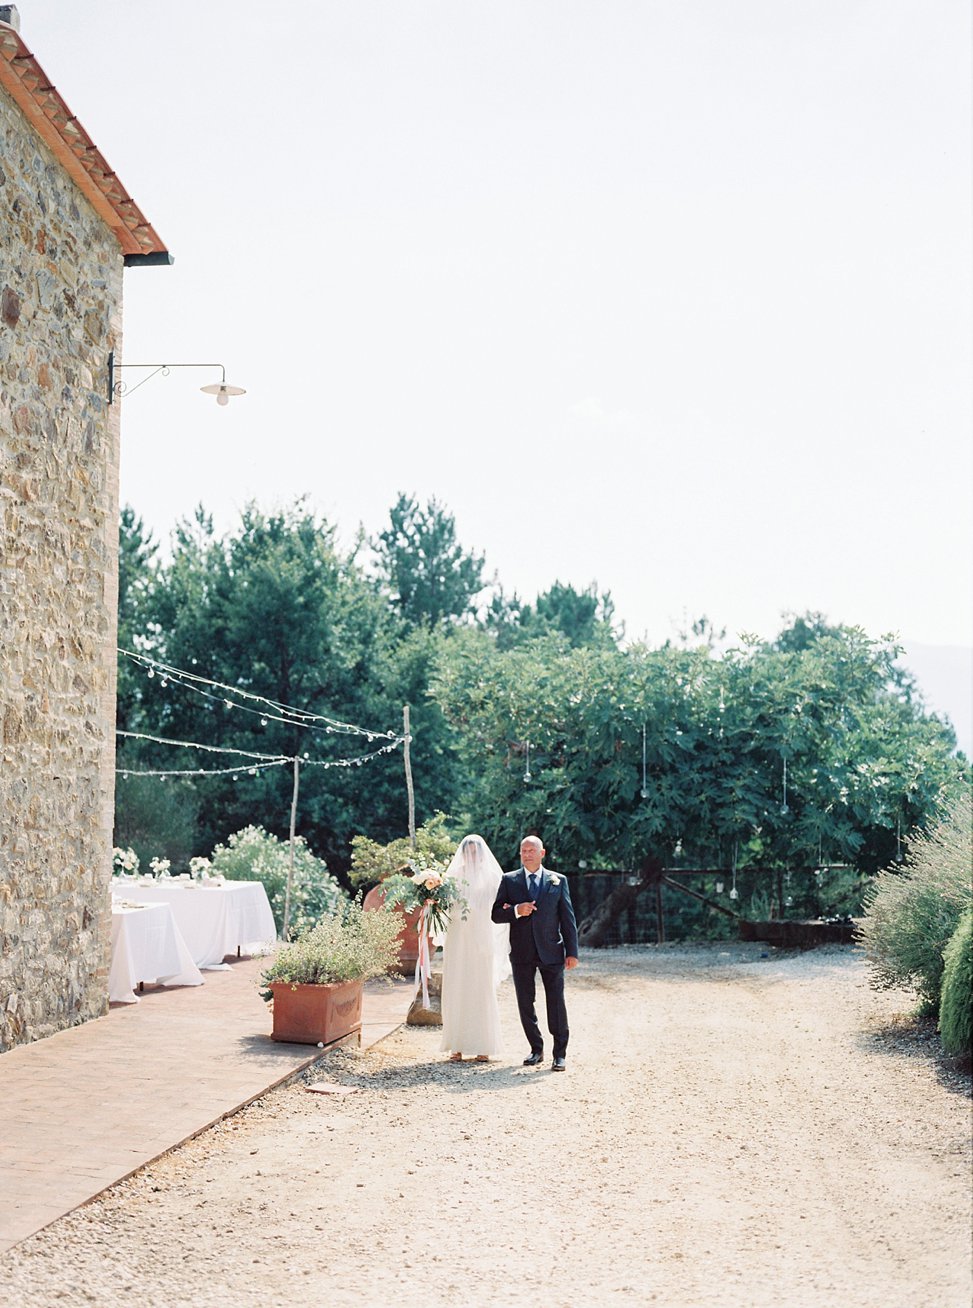 Amanda-Drost-Fotografie-Bruioft-Italie-Trouwen-buitenland-destination-wedding-italy_0098.jpg